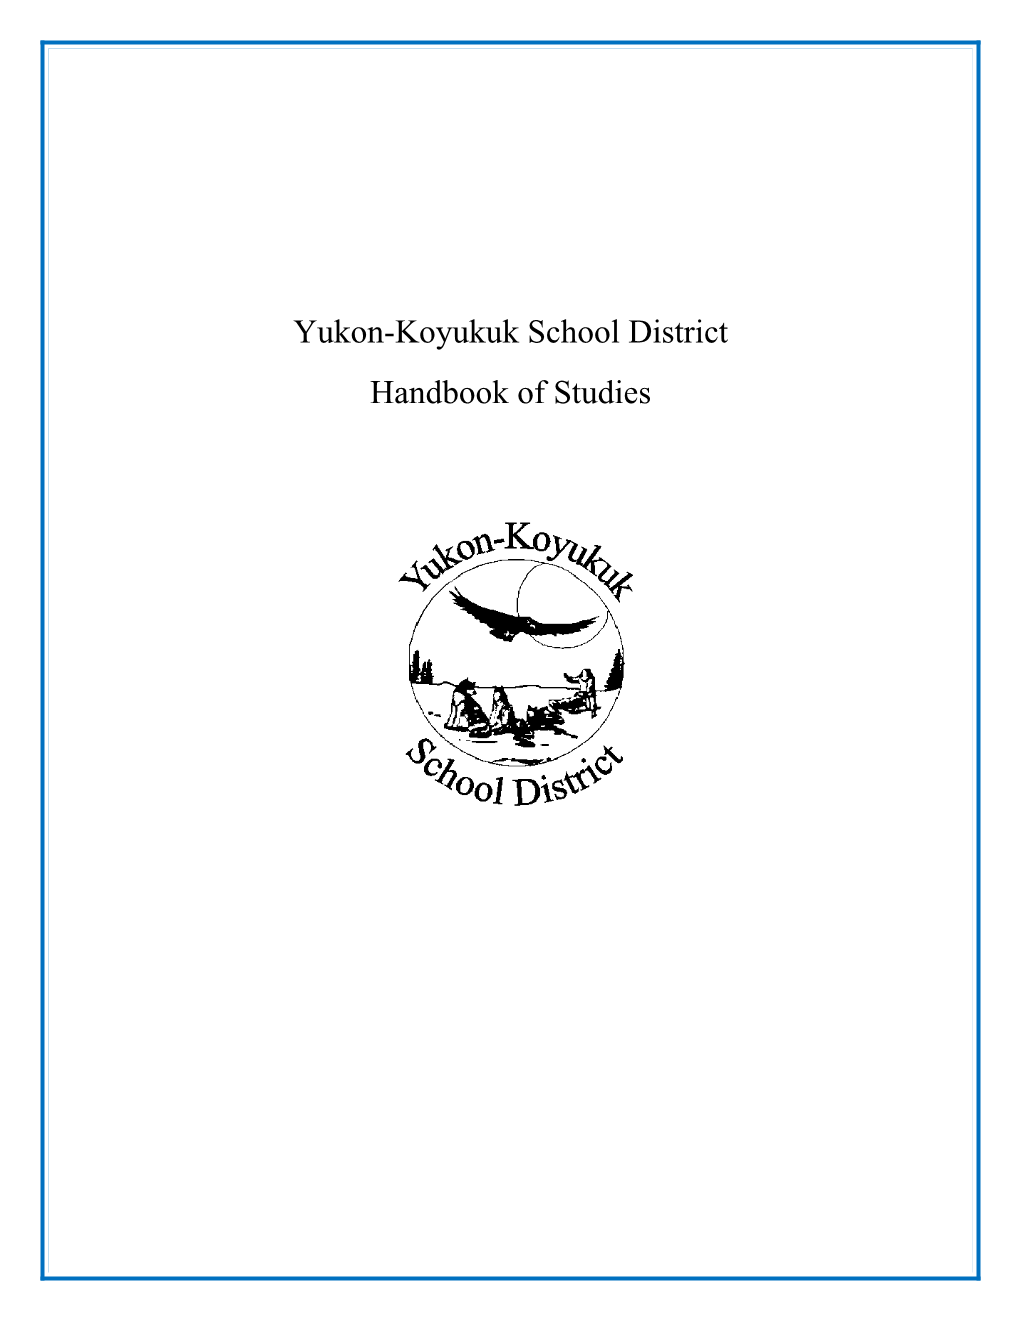 Yukon-Koyukuk School District